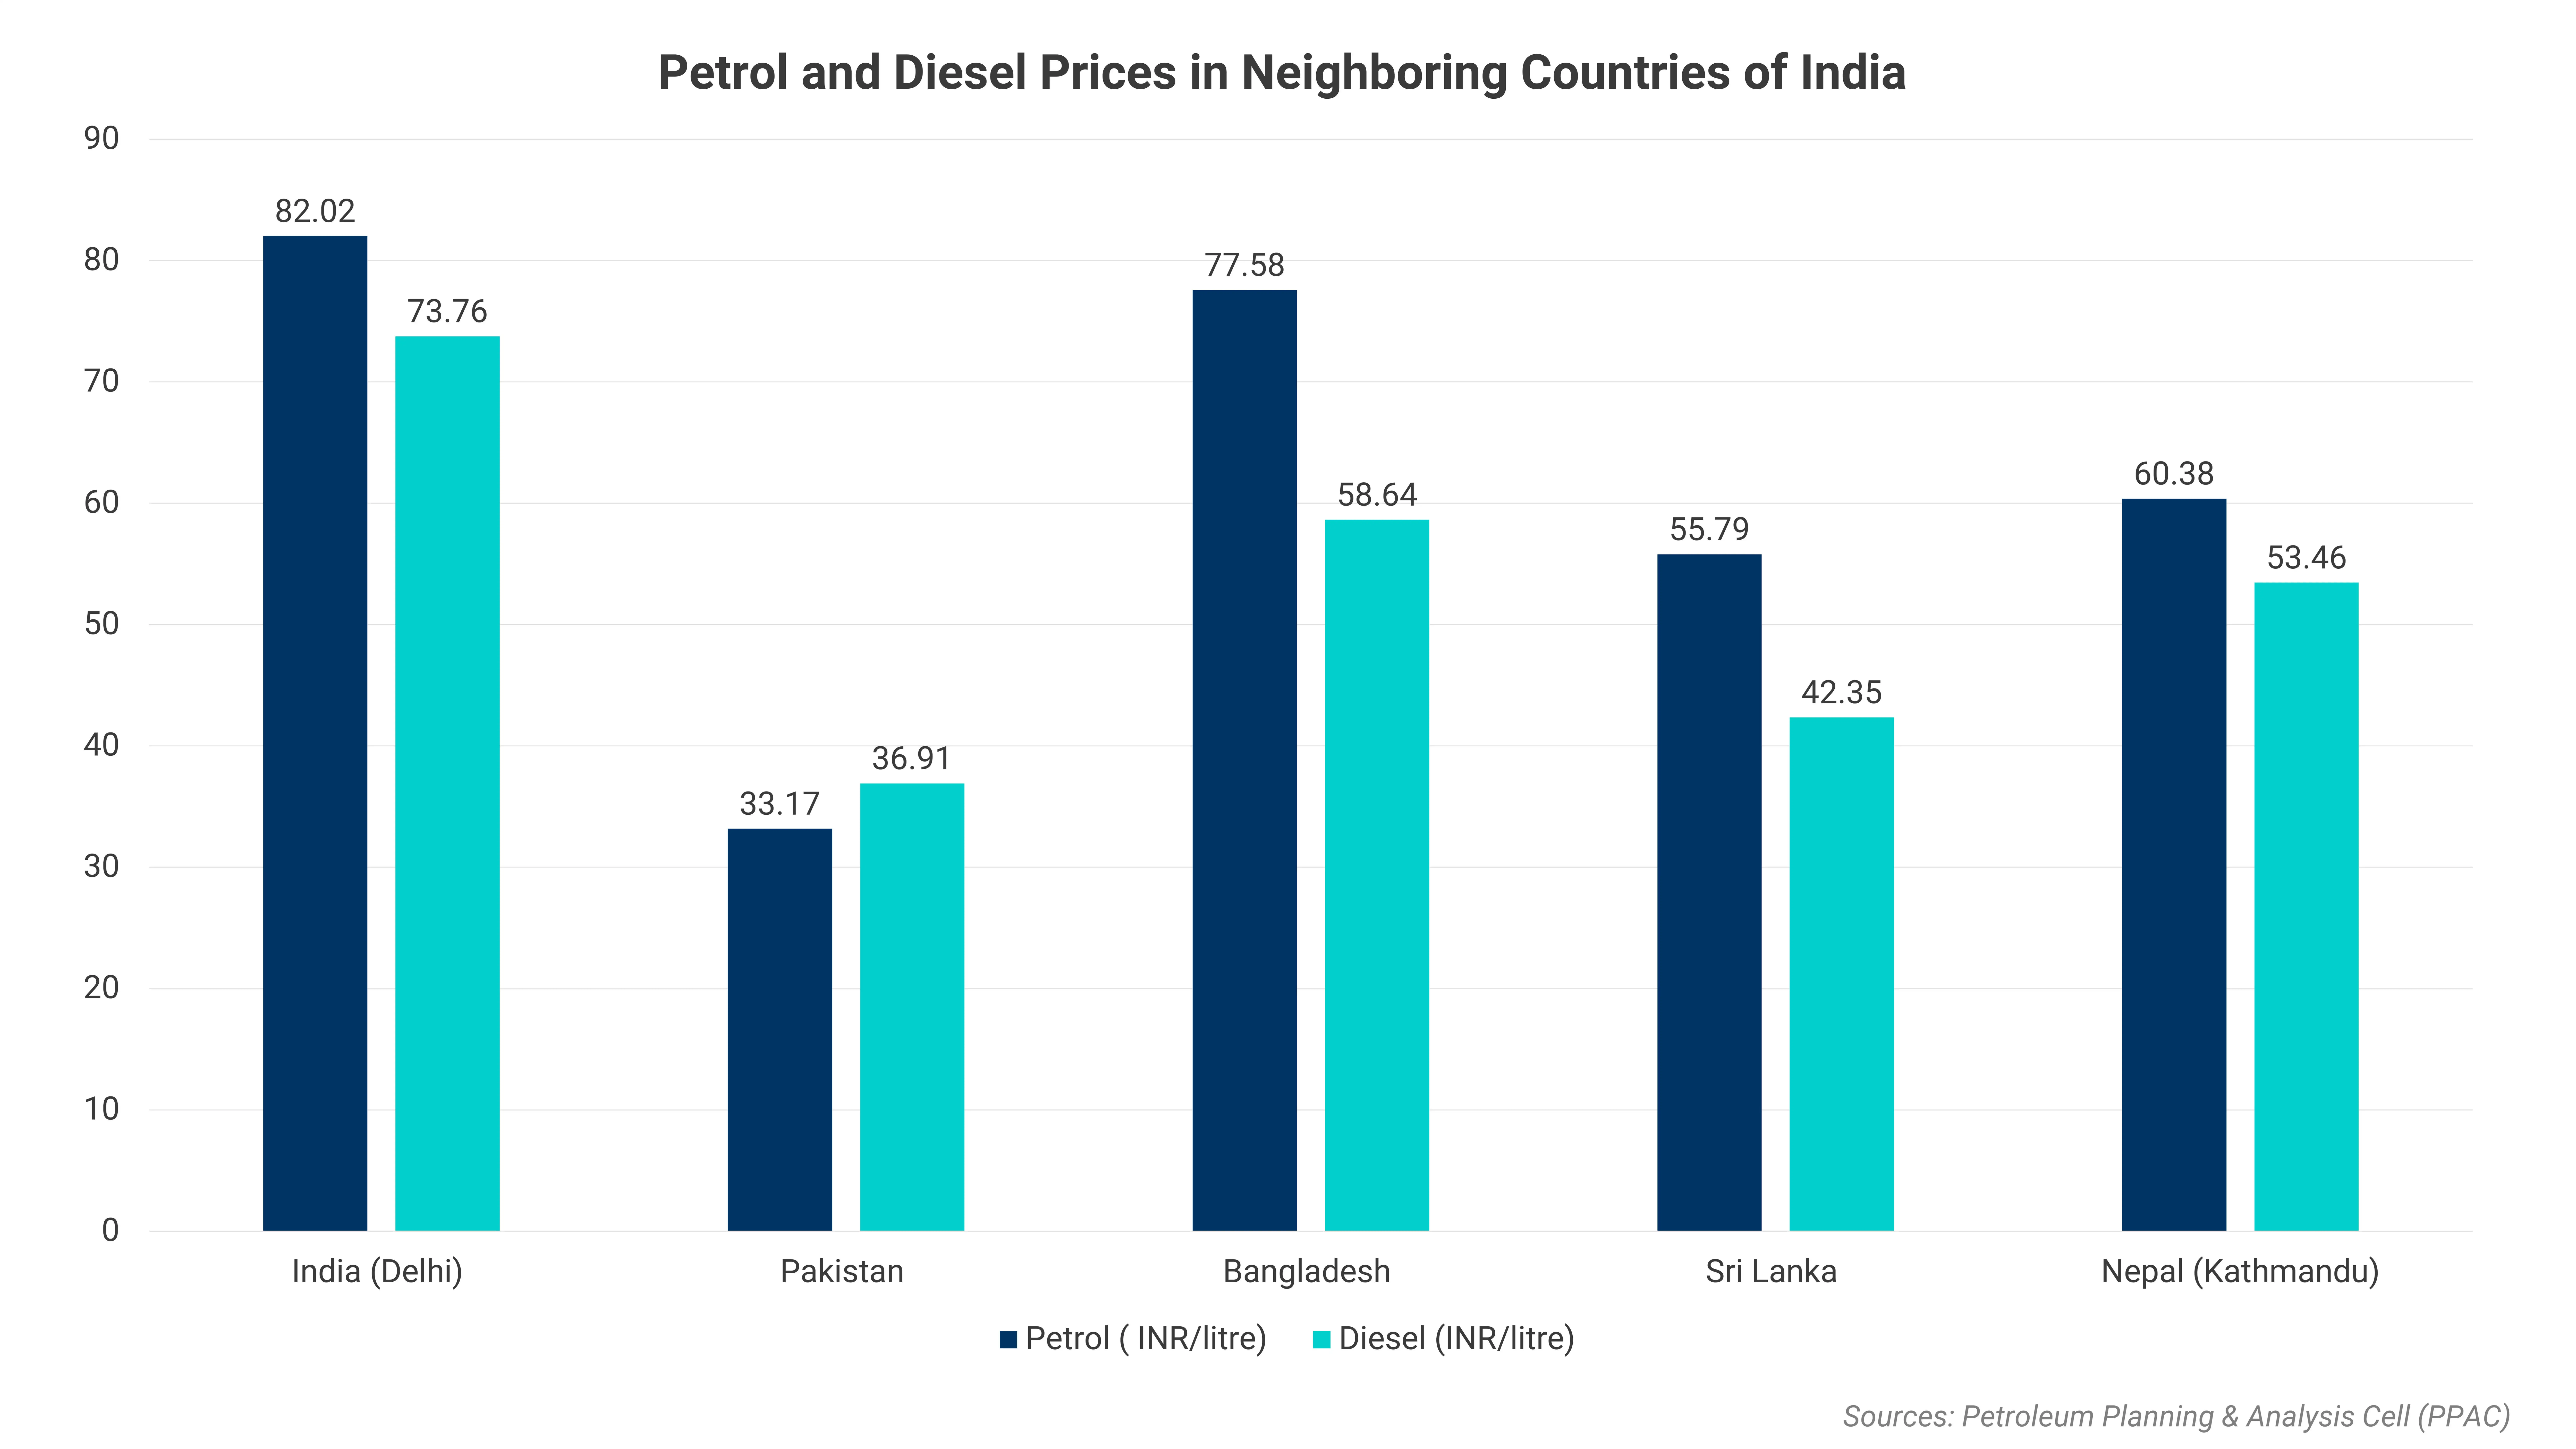 Price of Petrol and Diesel in neighboring countries